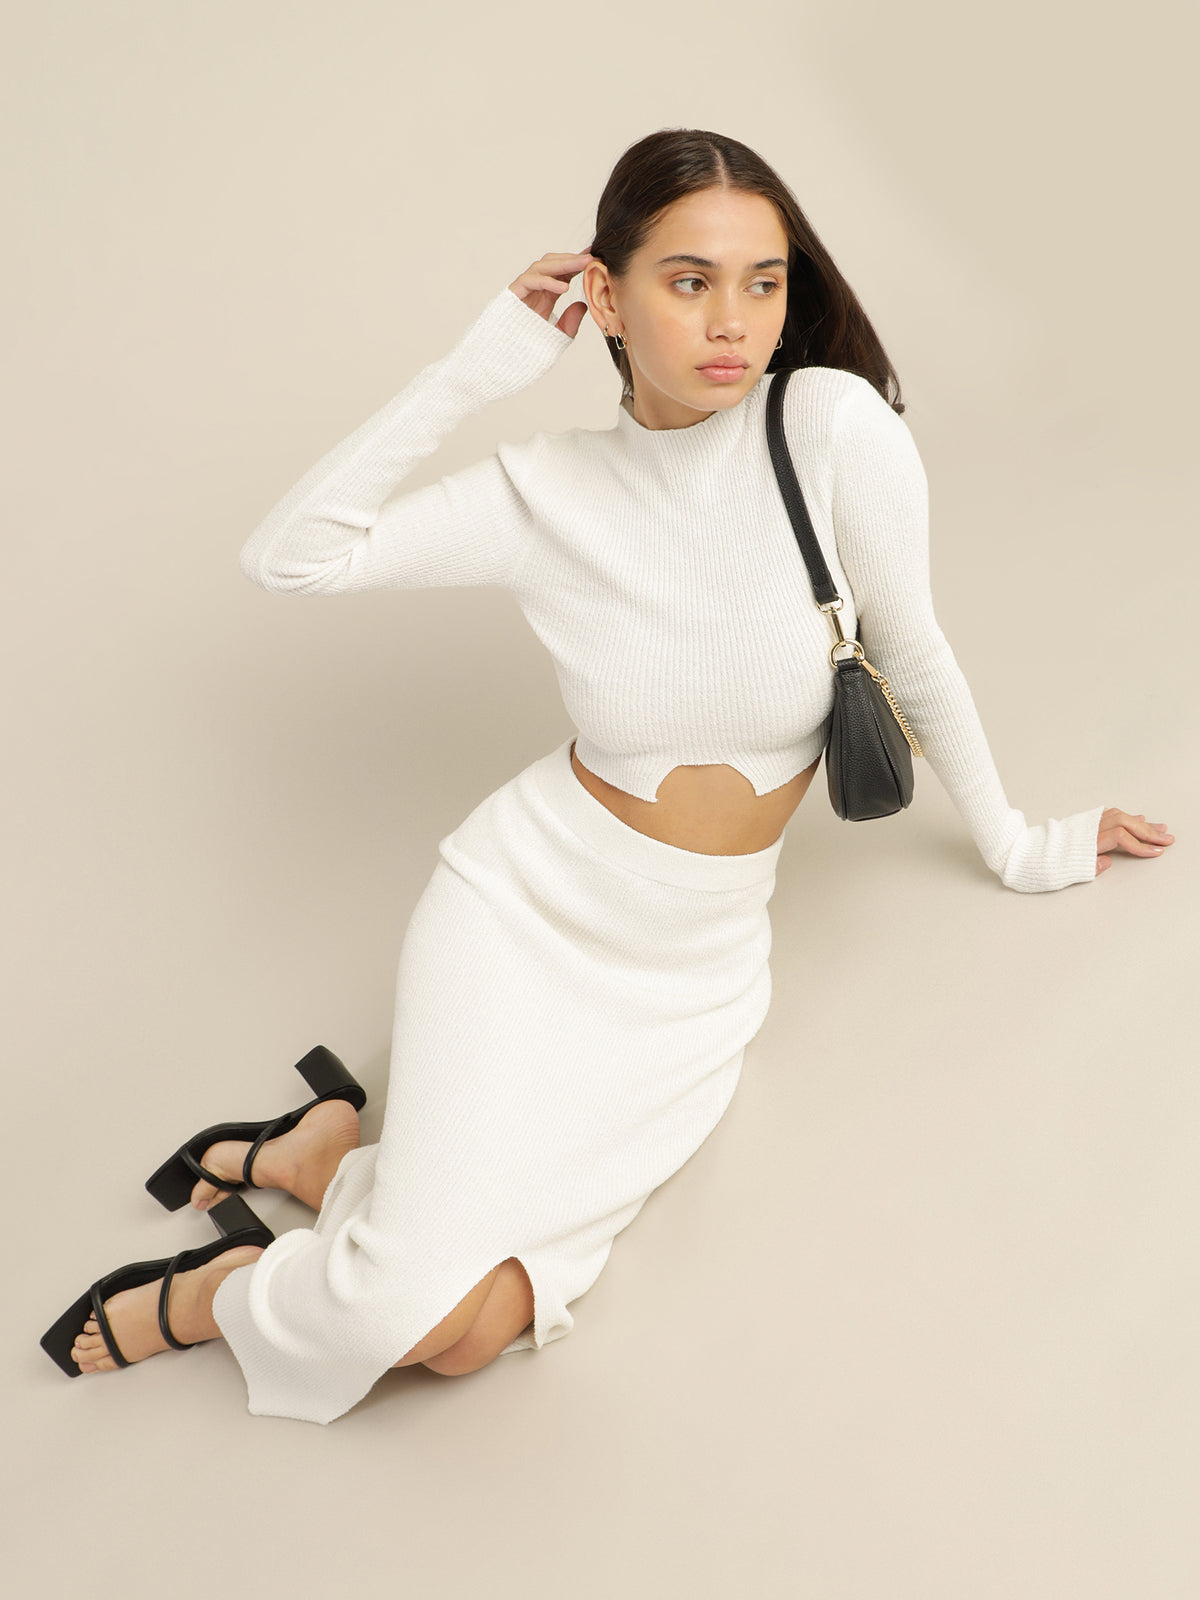 Ivy Knit Skirt in Ivory White